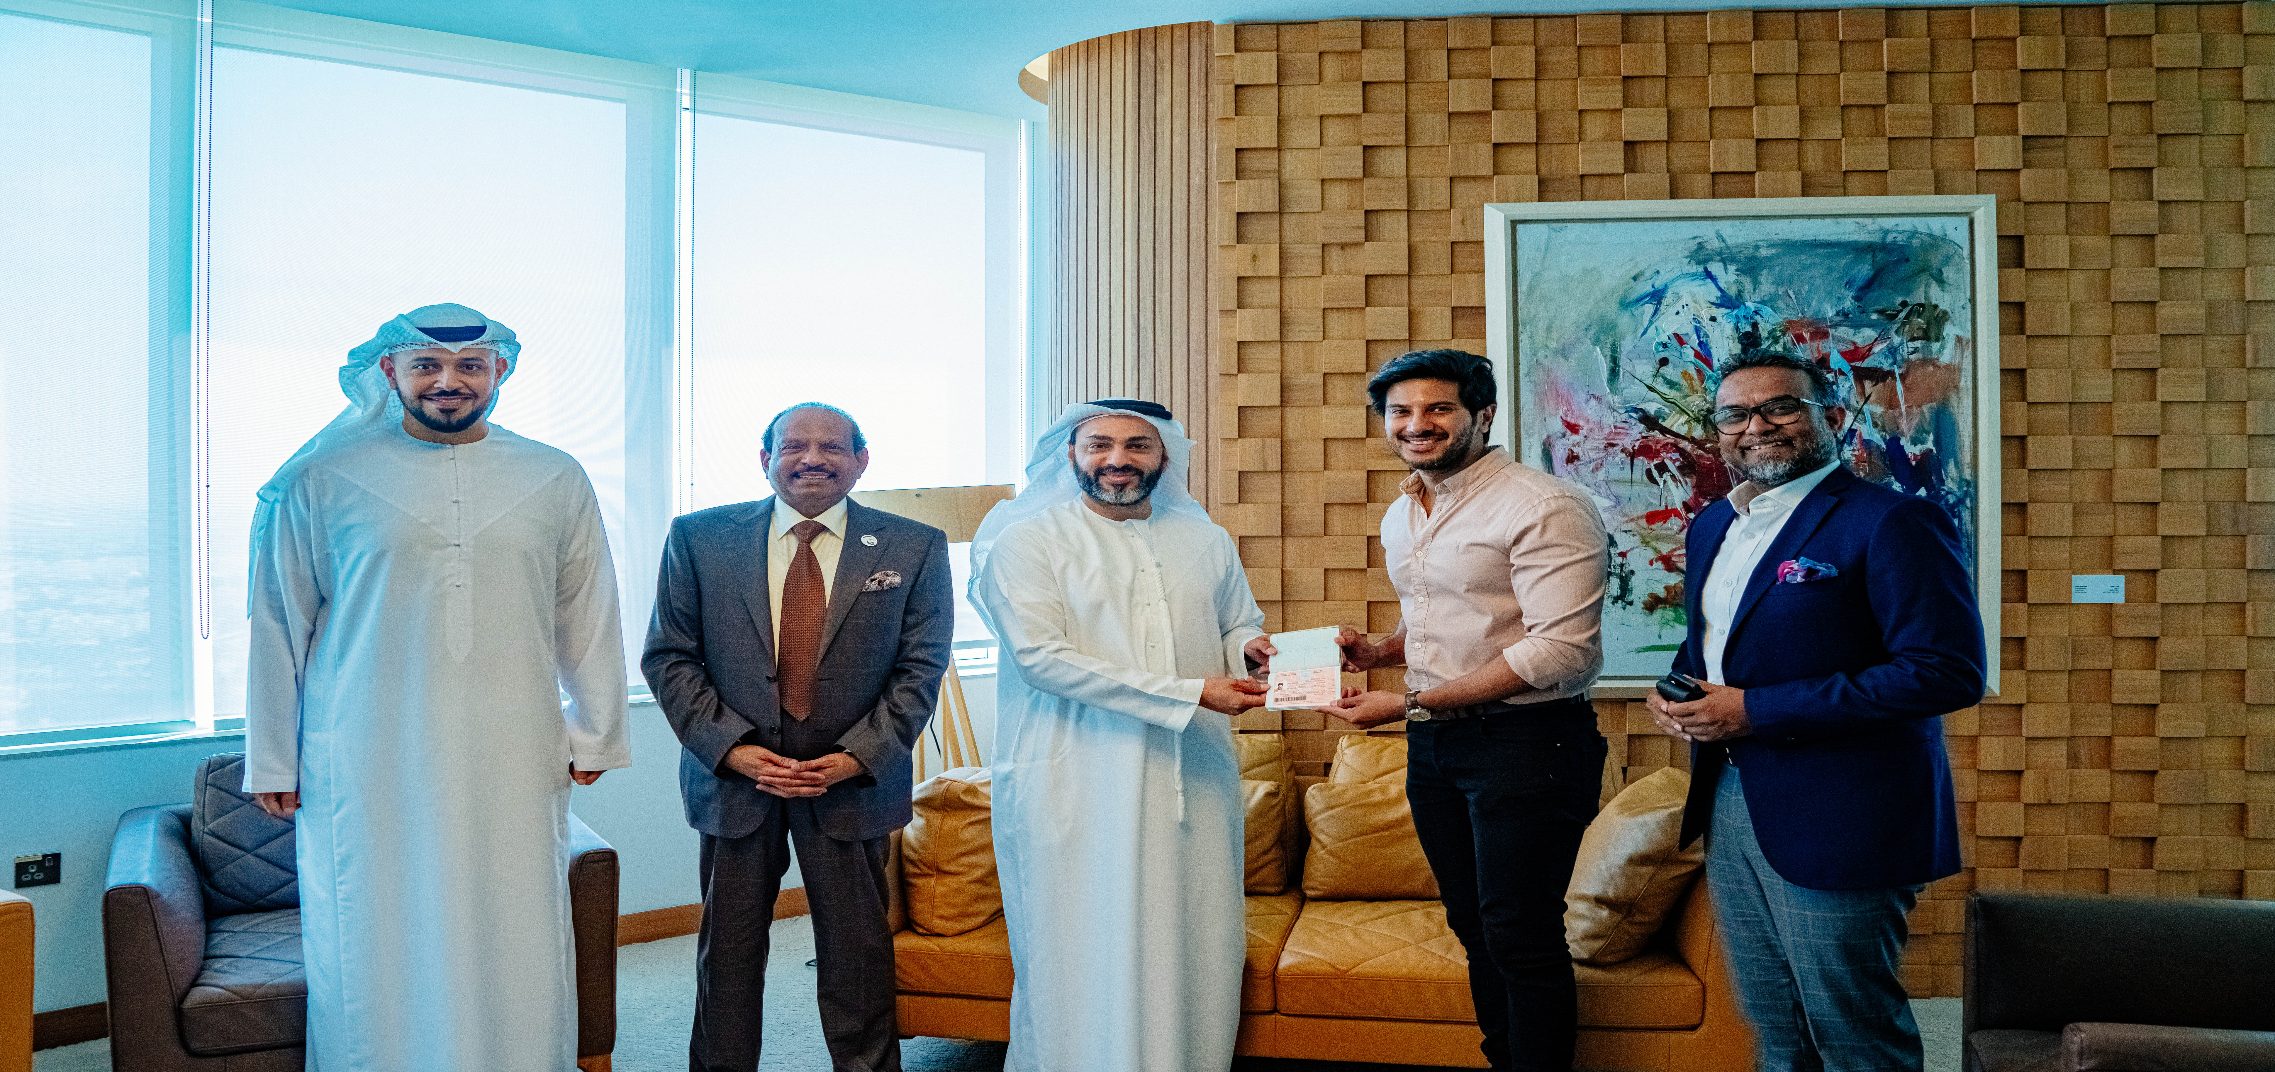 Popular Malayalam Actor Dulquer Salmaan receives UAE's Golden Visa in Abu Dhabi